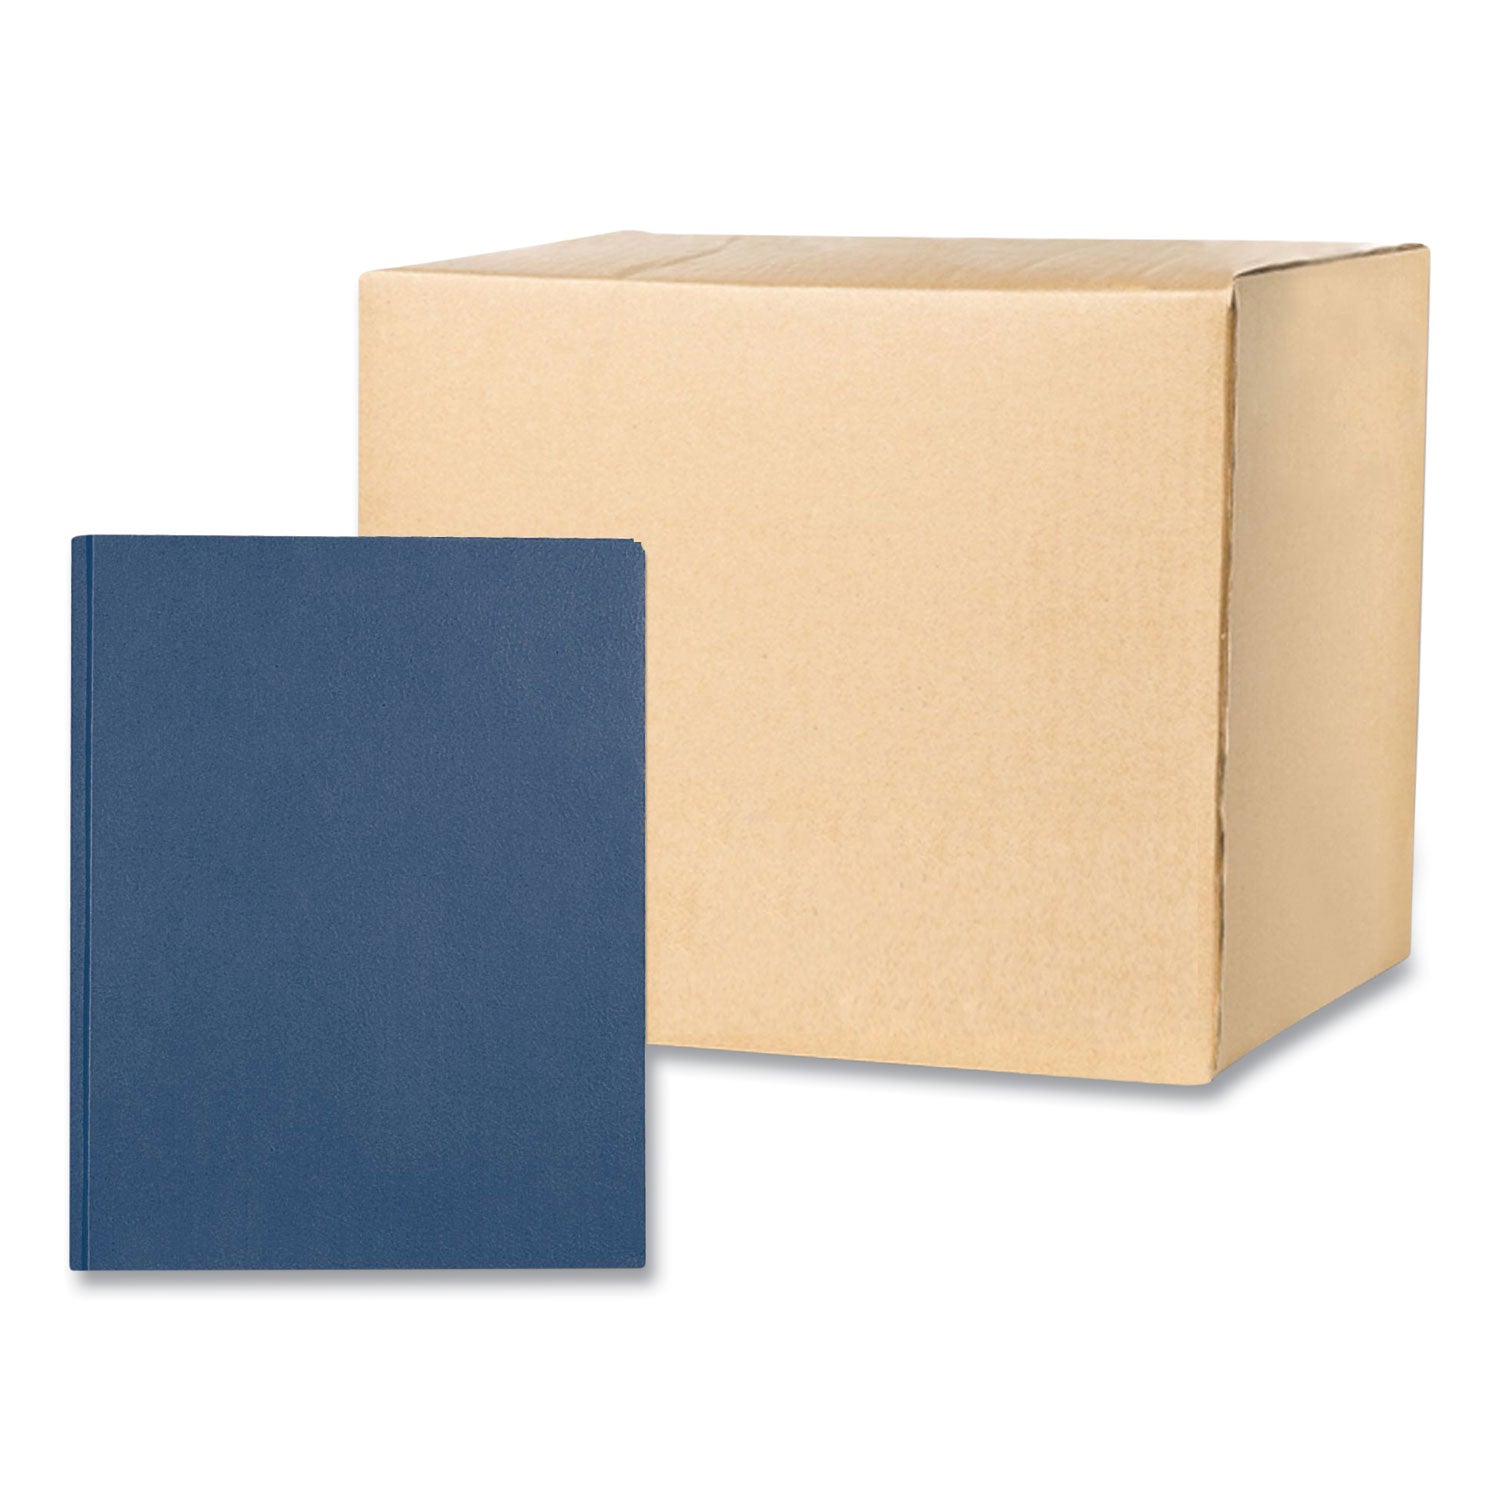 pocket-folder-with-3-fasteners-05-capacity-11-x-85-dark-blue-25-box-10-boxes-carton-ships-in-4-6-business-days_roa54121cs - 7